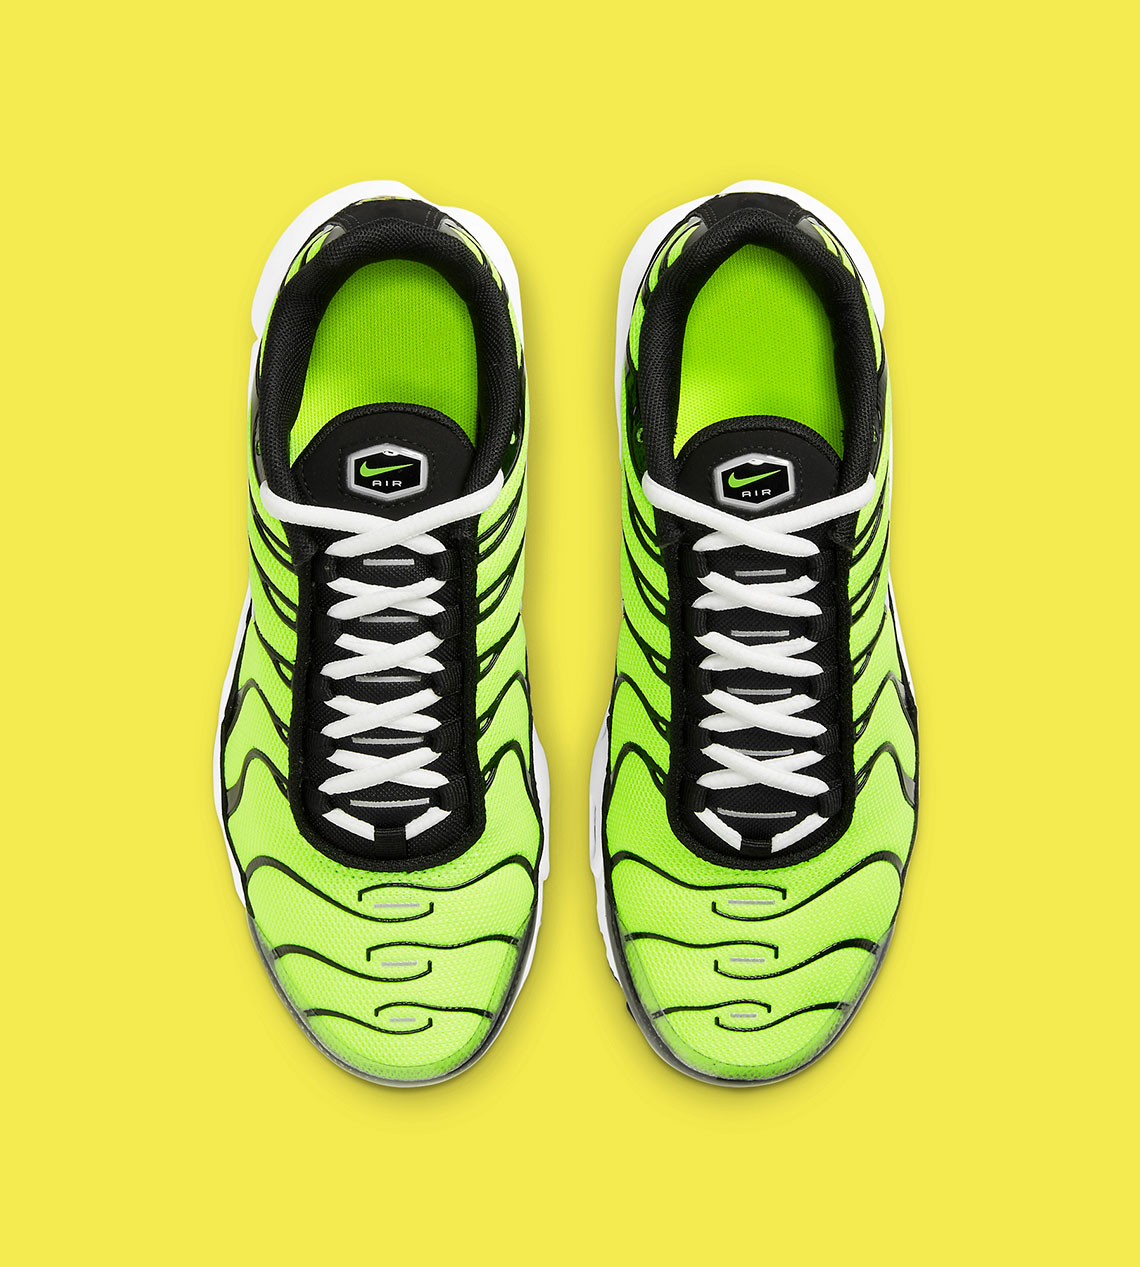 Nike Air Max Plus GS Hot Lime CD0609-301 | SneakerNews.com عطر الفرمونات من نعومي